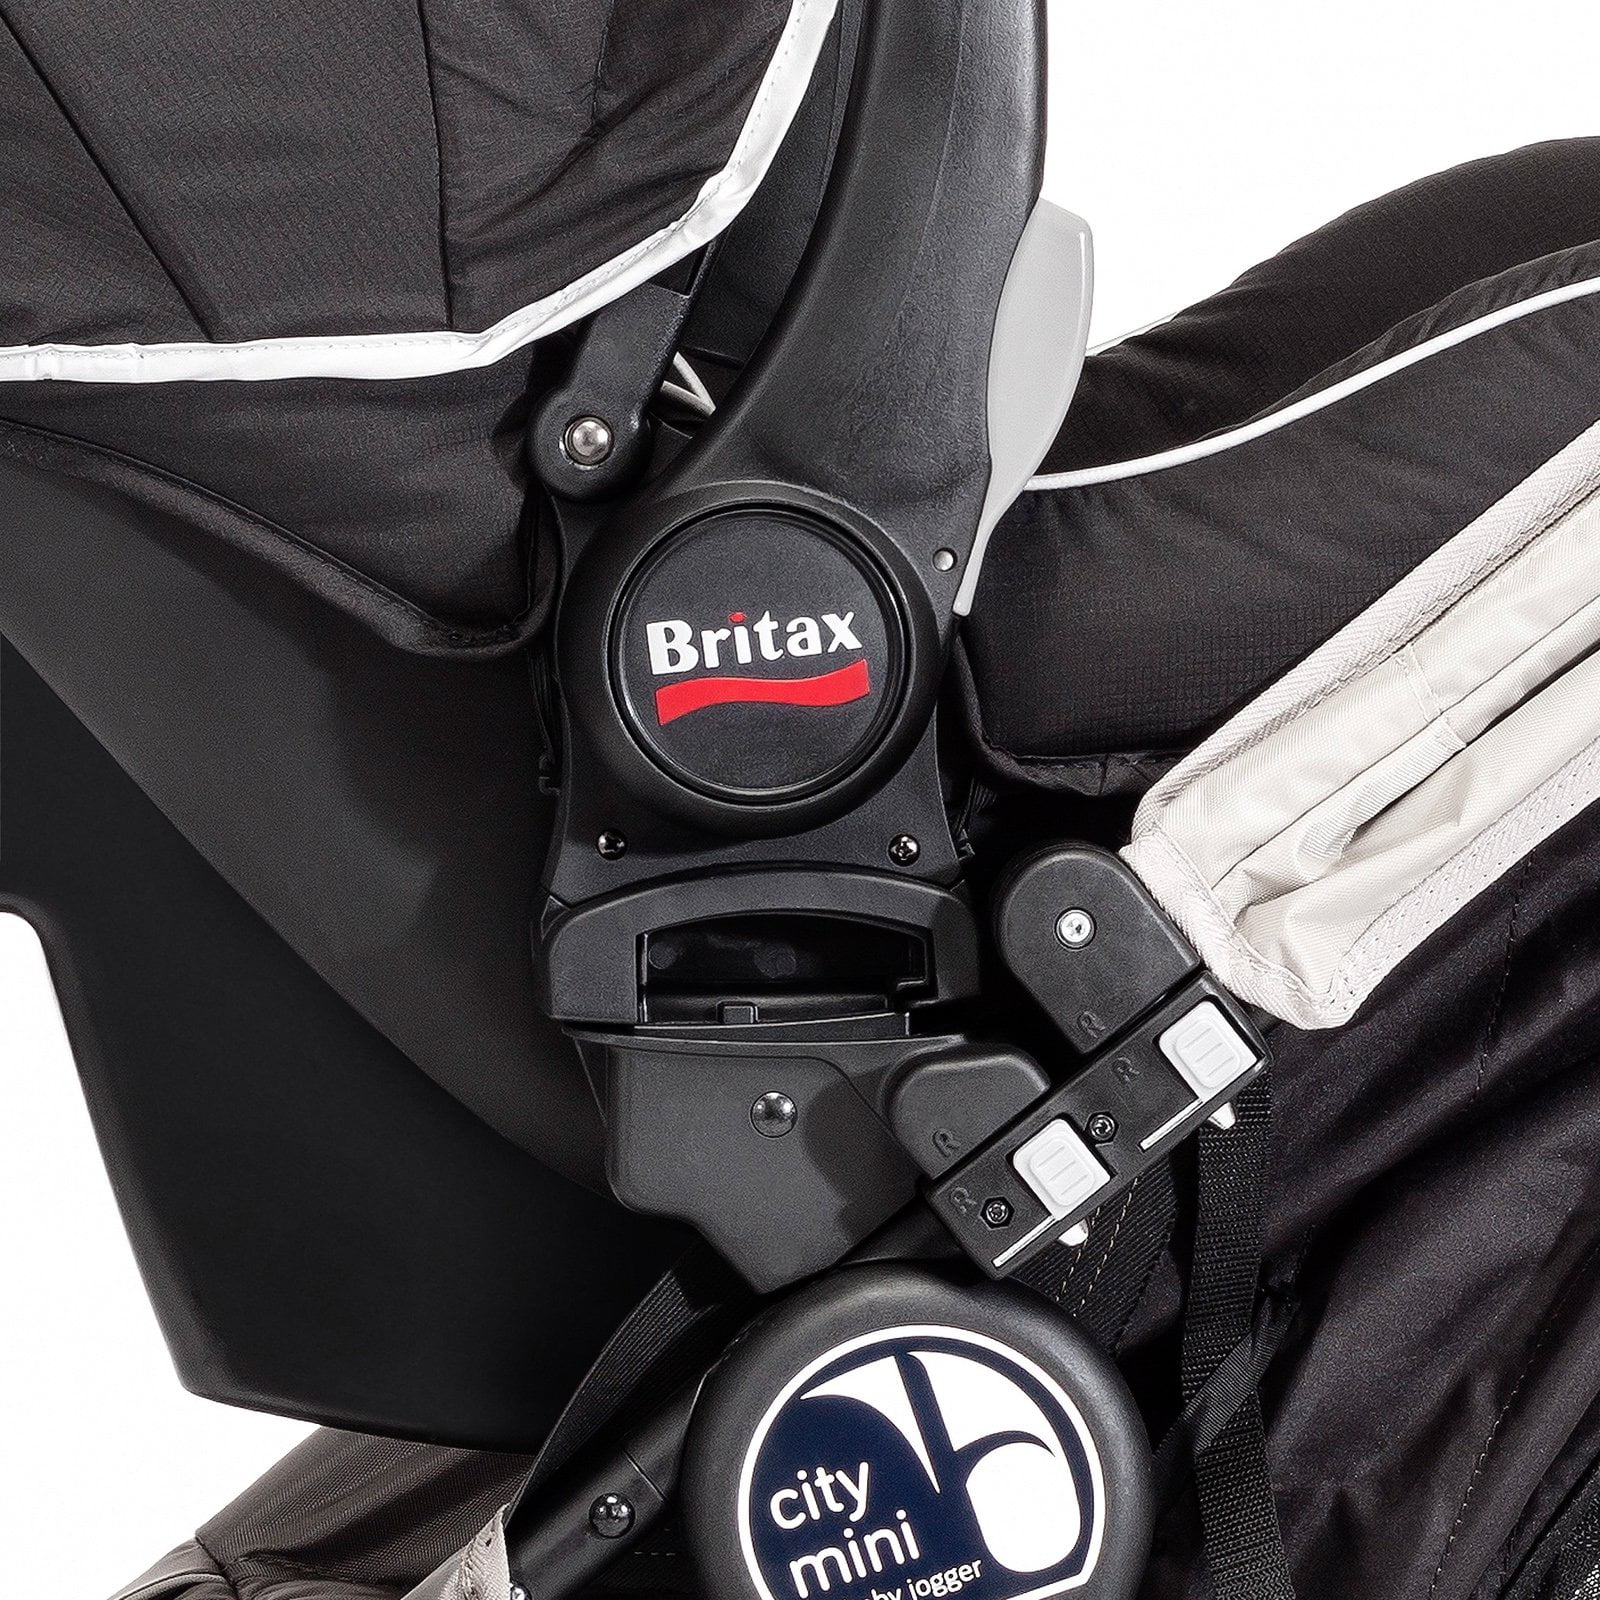 Car Seat Adapter For Bob And Britax, Britax Universal Car Seat Adapter